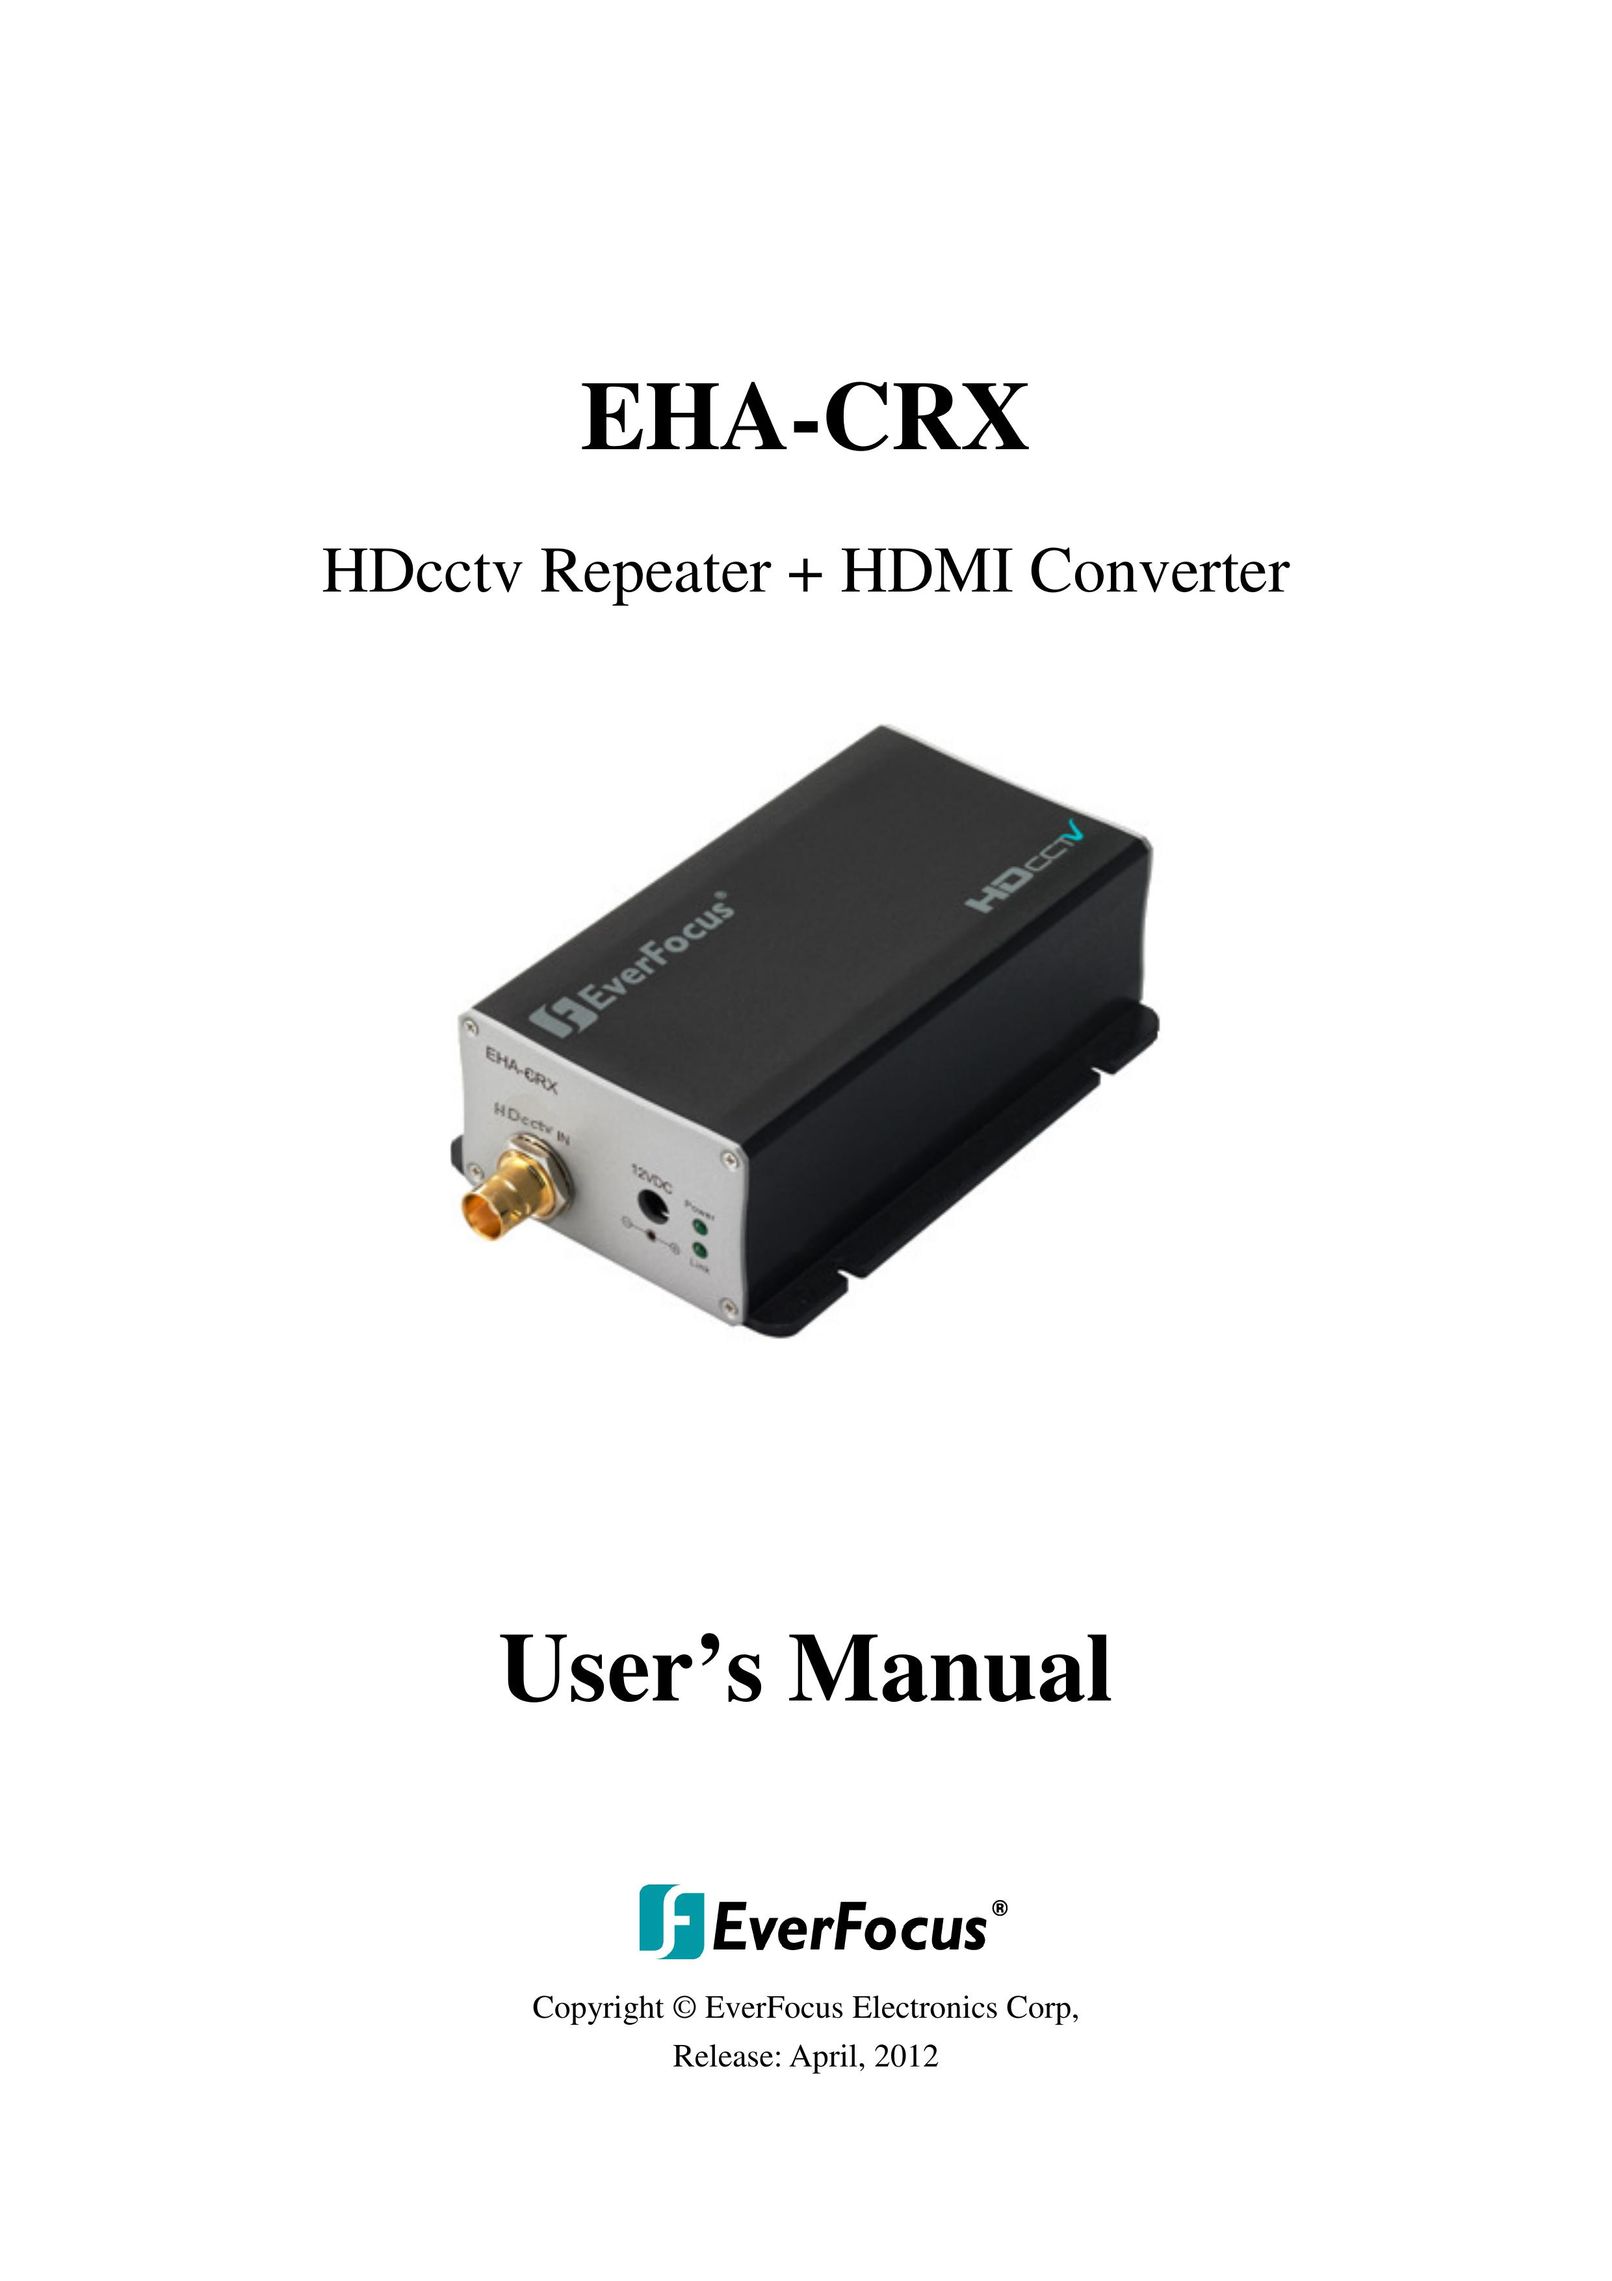 EverFocus EHA-CRX TV Cables User Manual